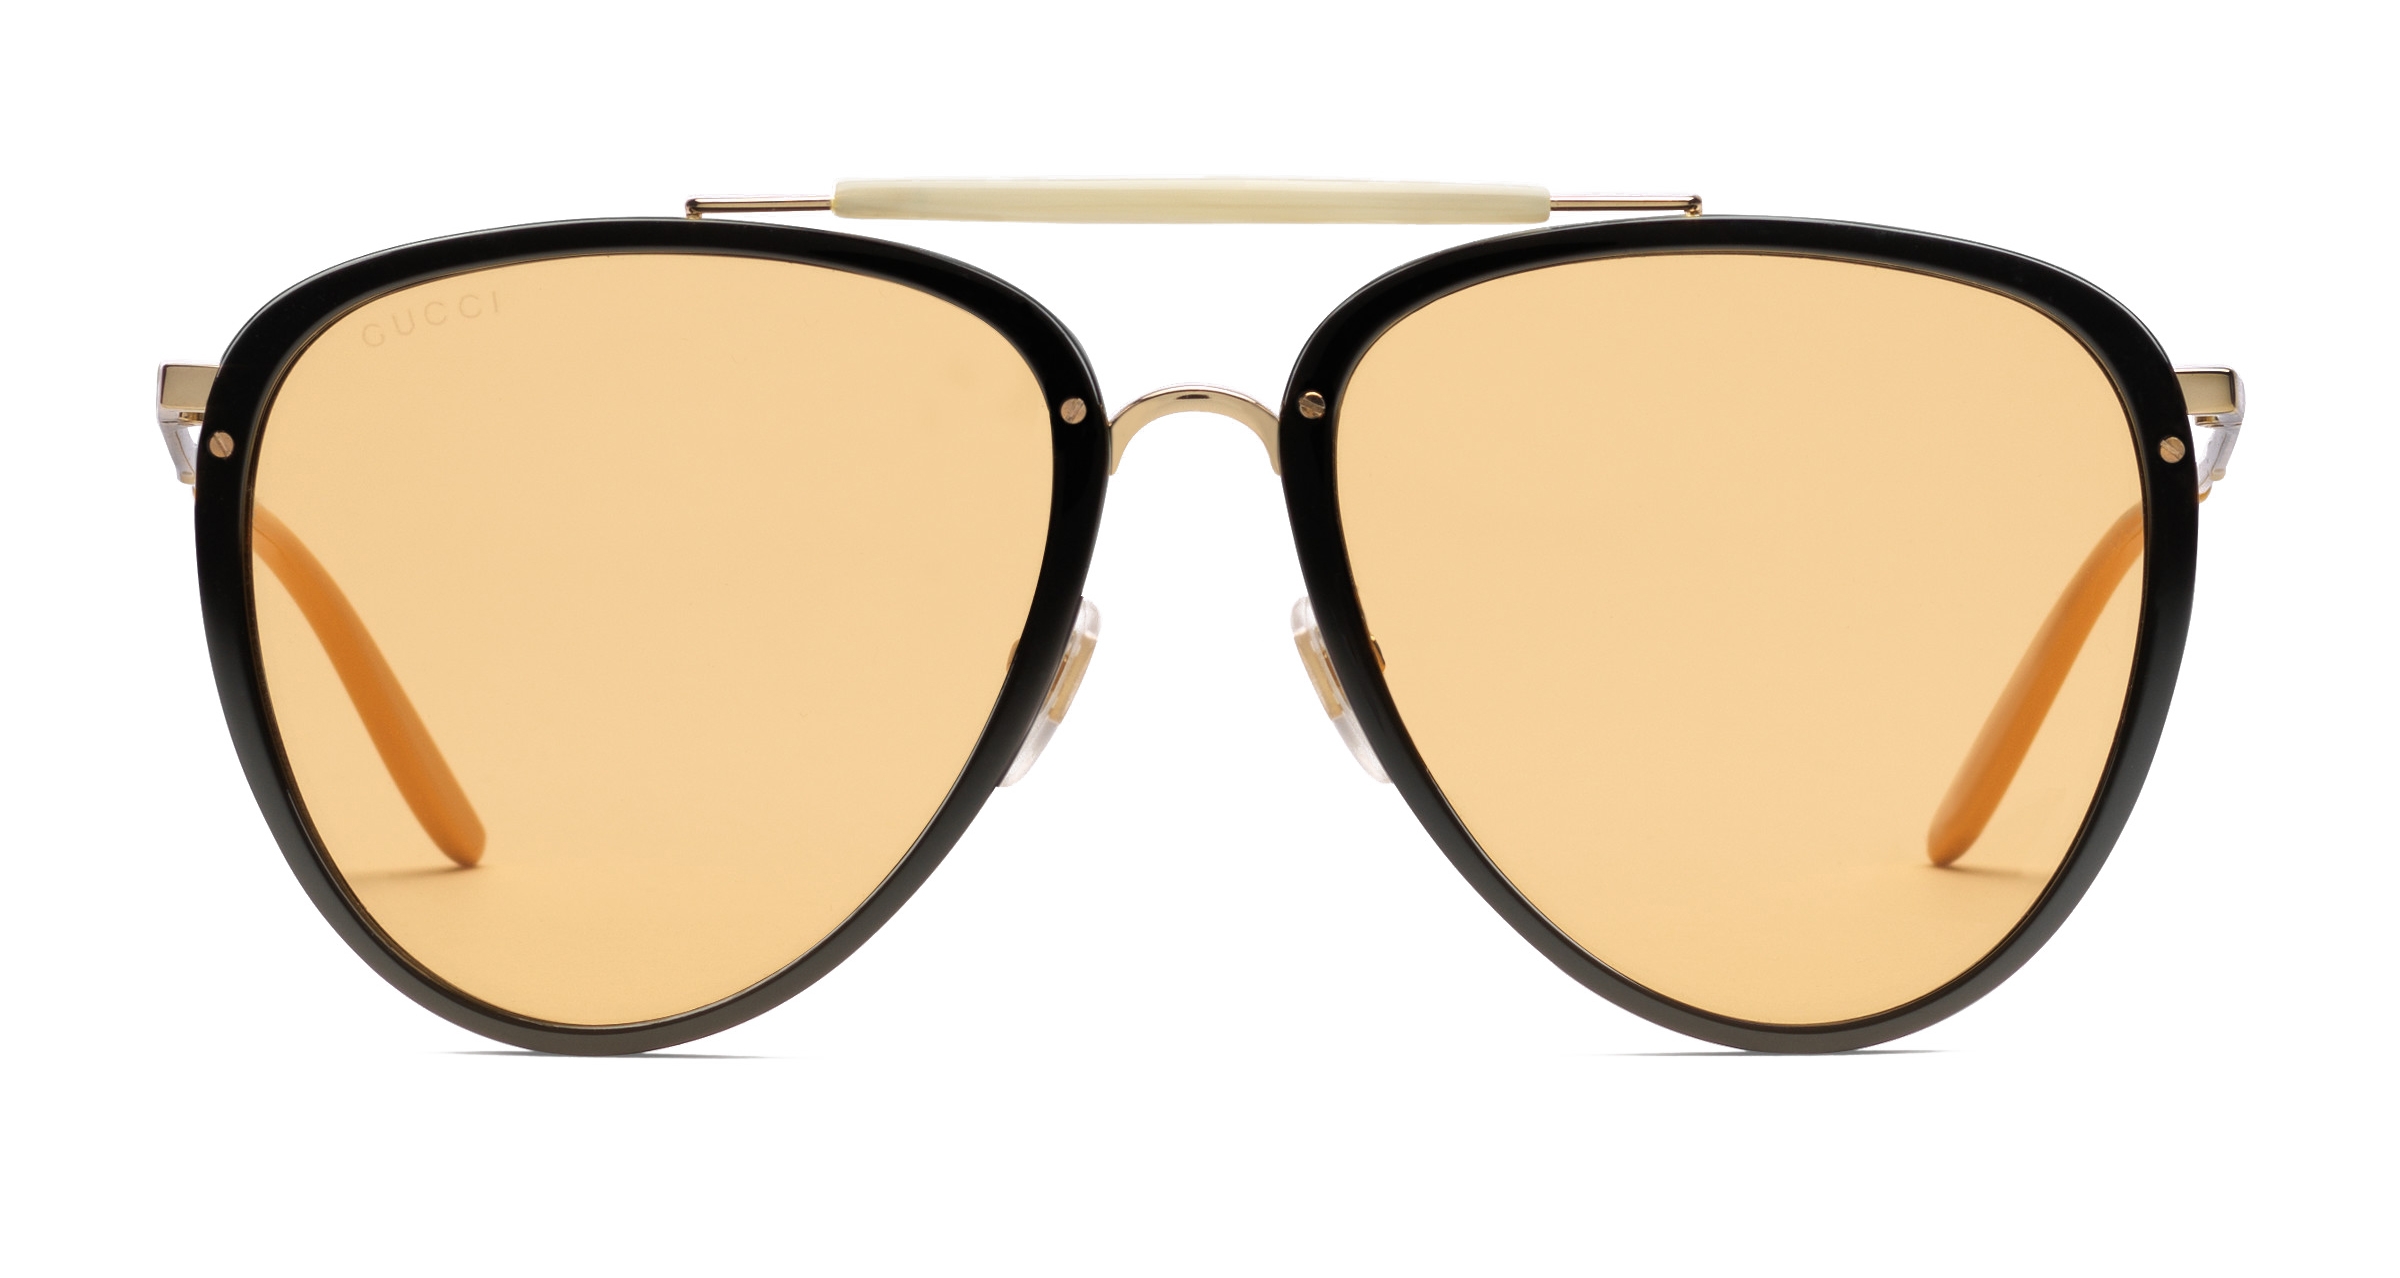 Gucci - Square Metal Sunglasses - Gold - Gucci Eyewear - Avvenice